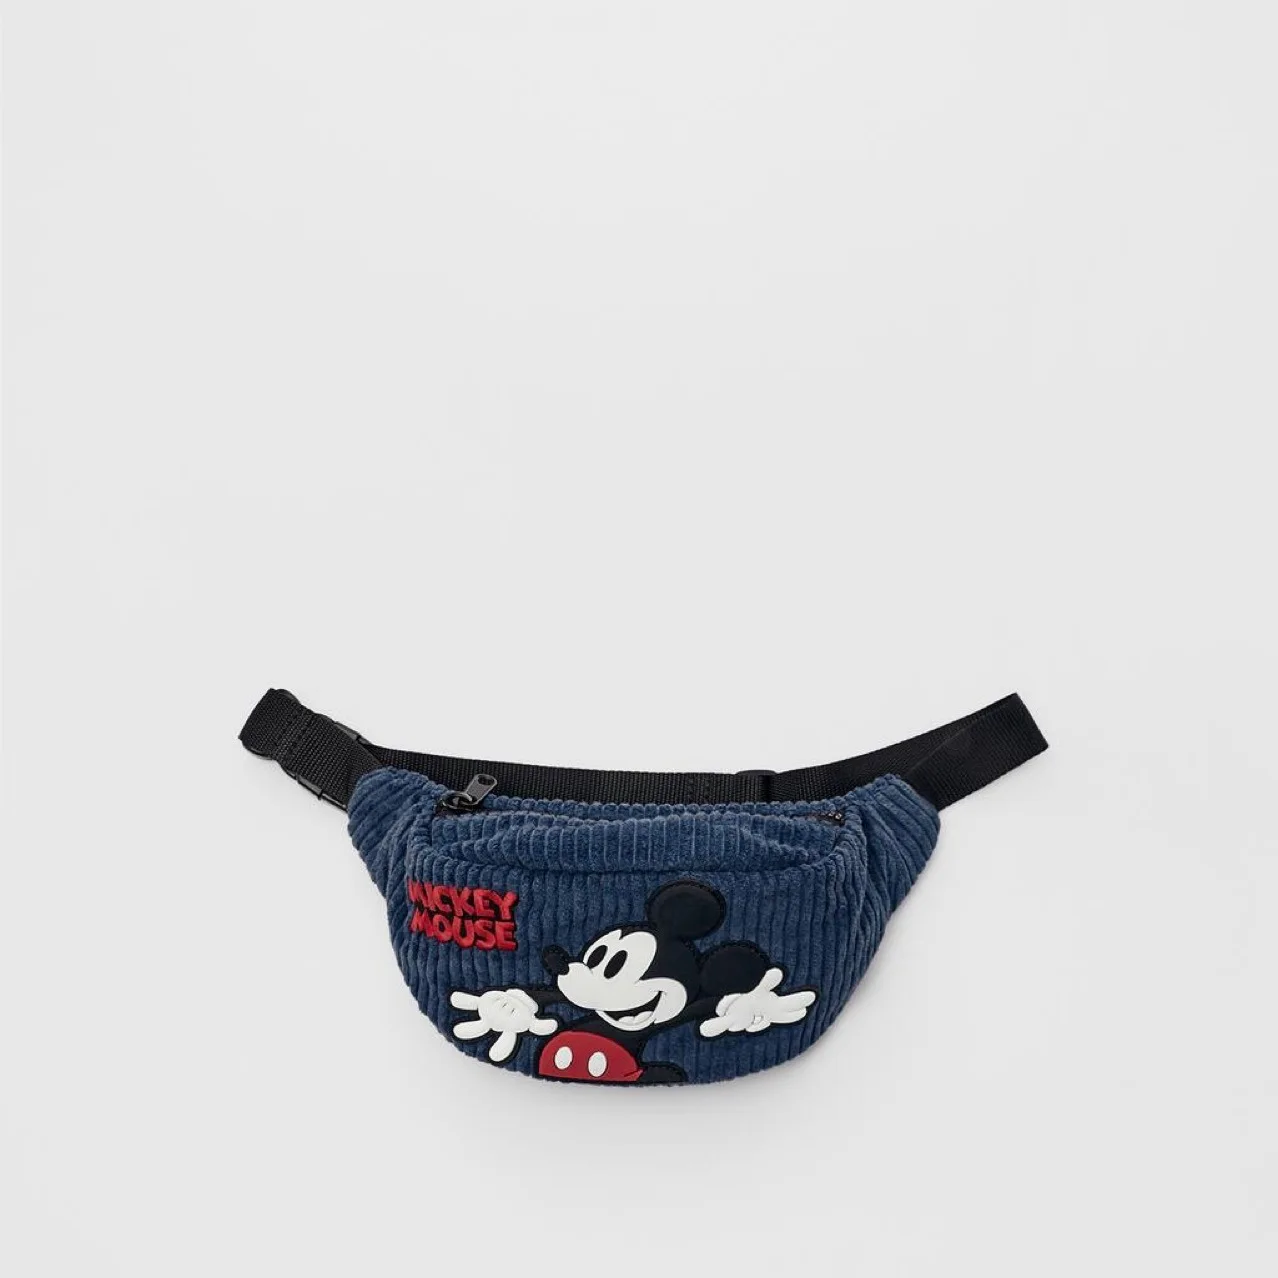 New Disney Mickey Mouse Cartoon Printed Fanny Pack Mickey Mouse Adorns The Corduroy Fanny Pack Plush Backpack Fashion Bag Purses image_1